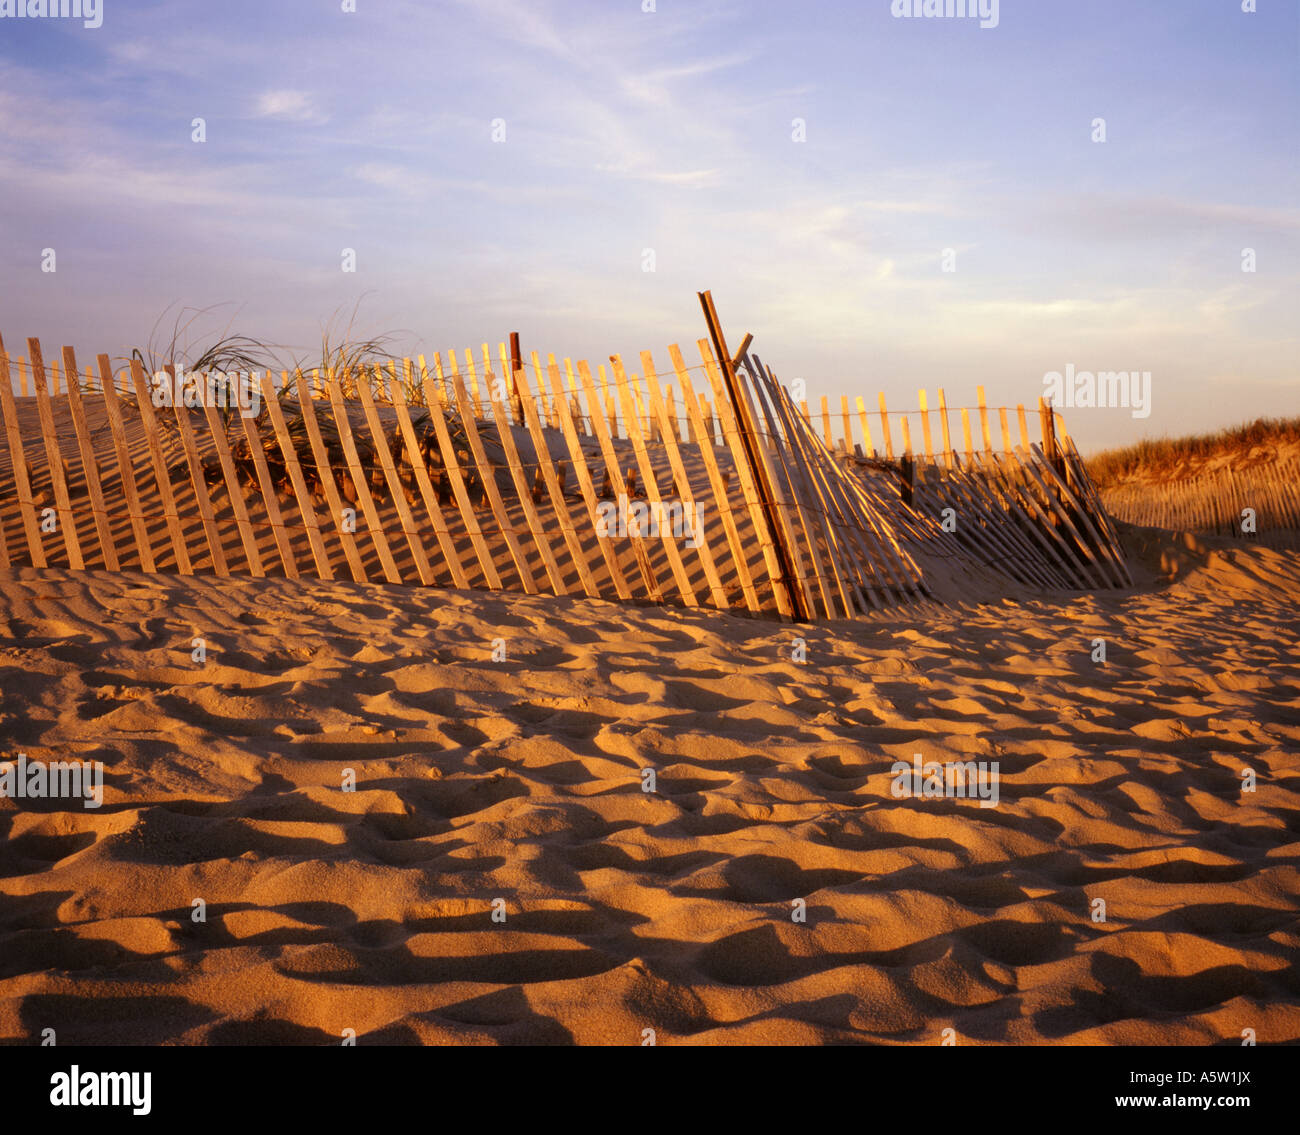 Wooden fence and contours on sandy beach cast long shadows as the sun sets,Martha's Vineyard,U.S.A. Stock Photo